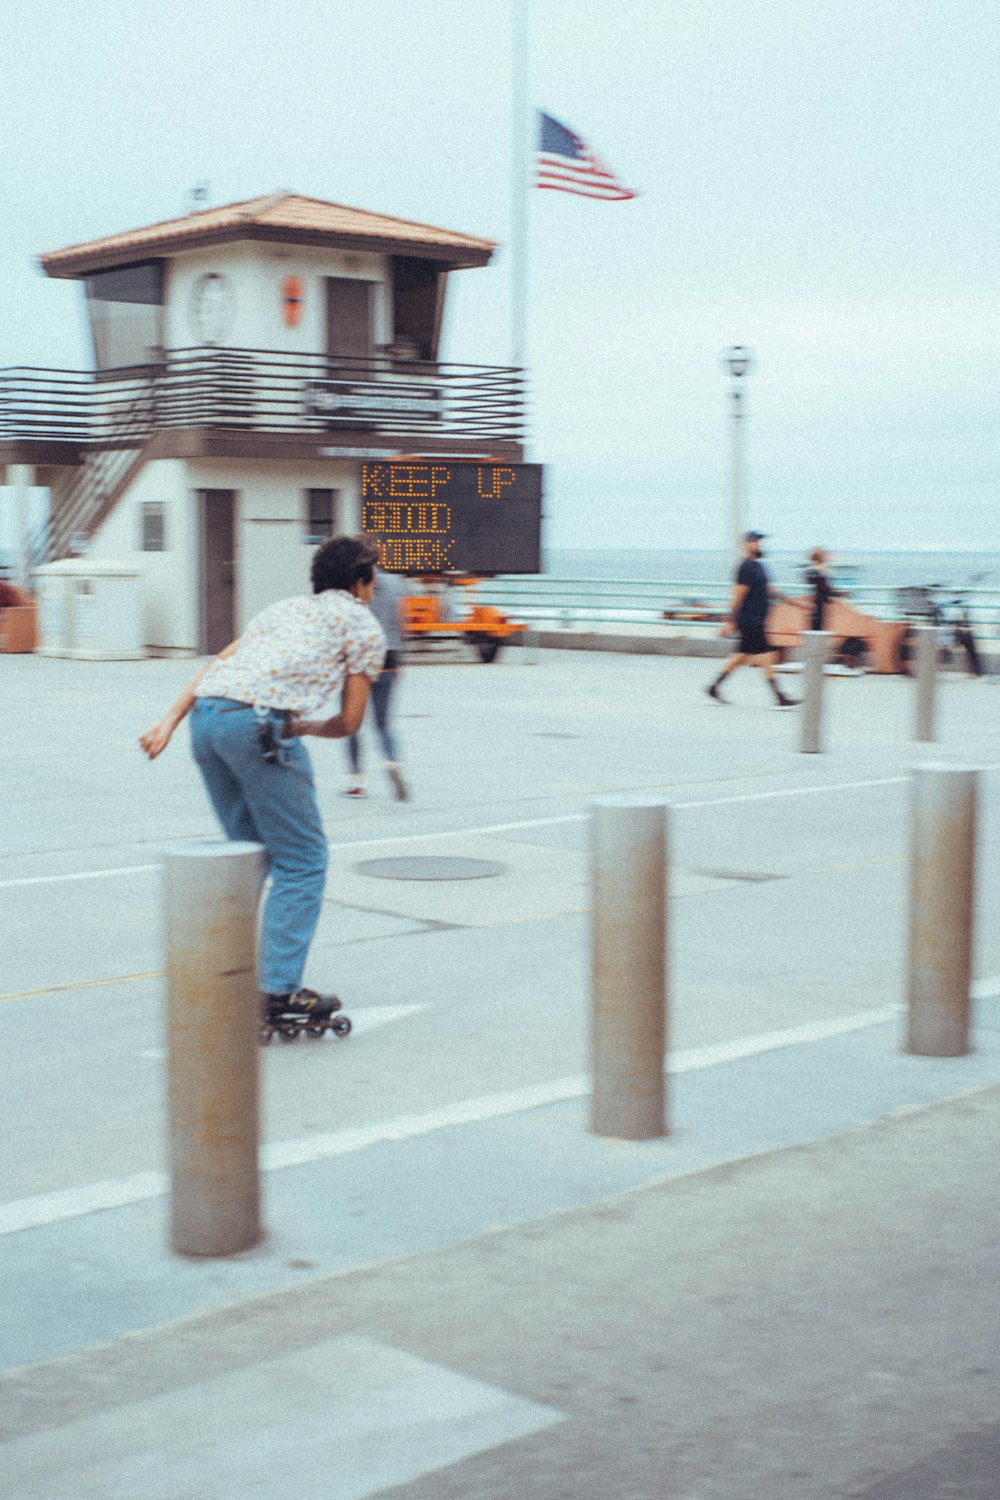 a man riding a skateboard down the side of a sidewalk